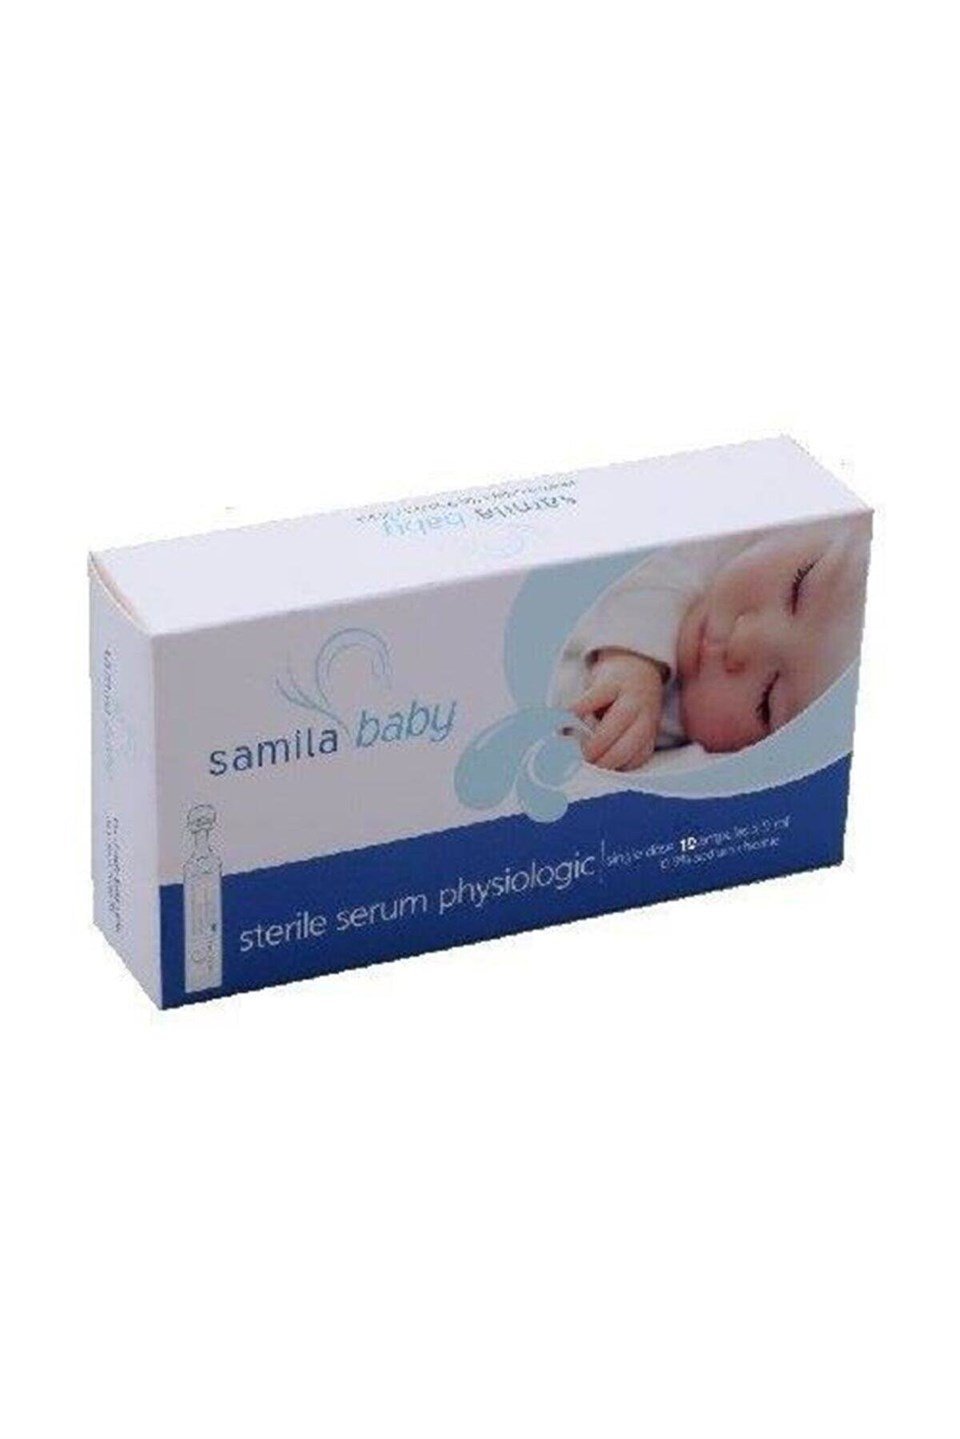 Samila Baby Serum Fizyolojik 5 ml 10 Flakon - tekyerdenal.com